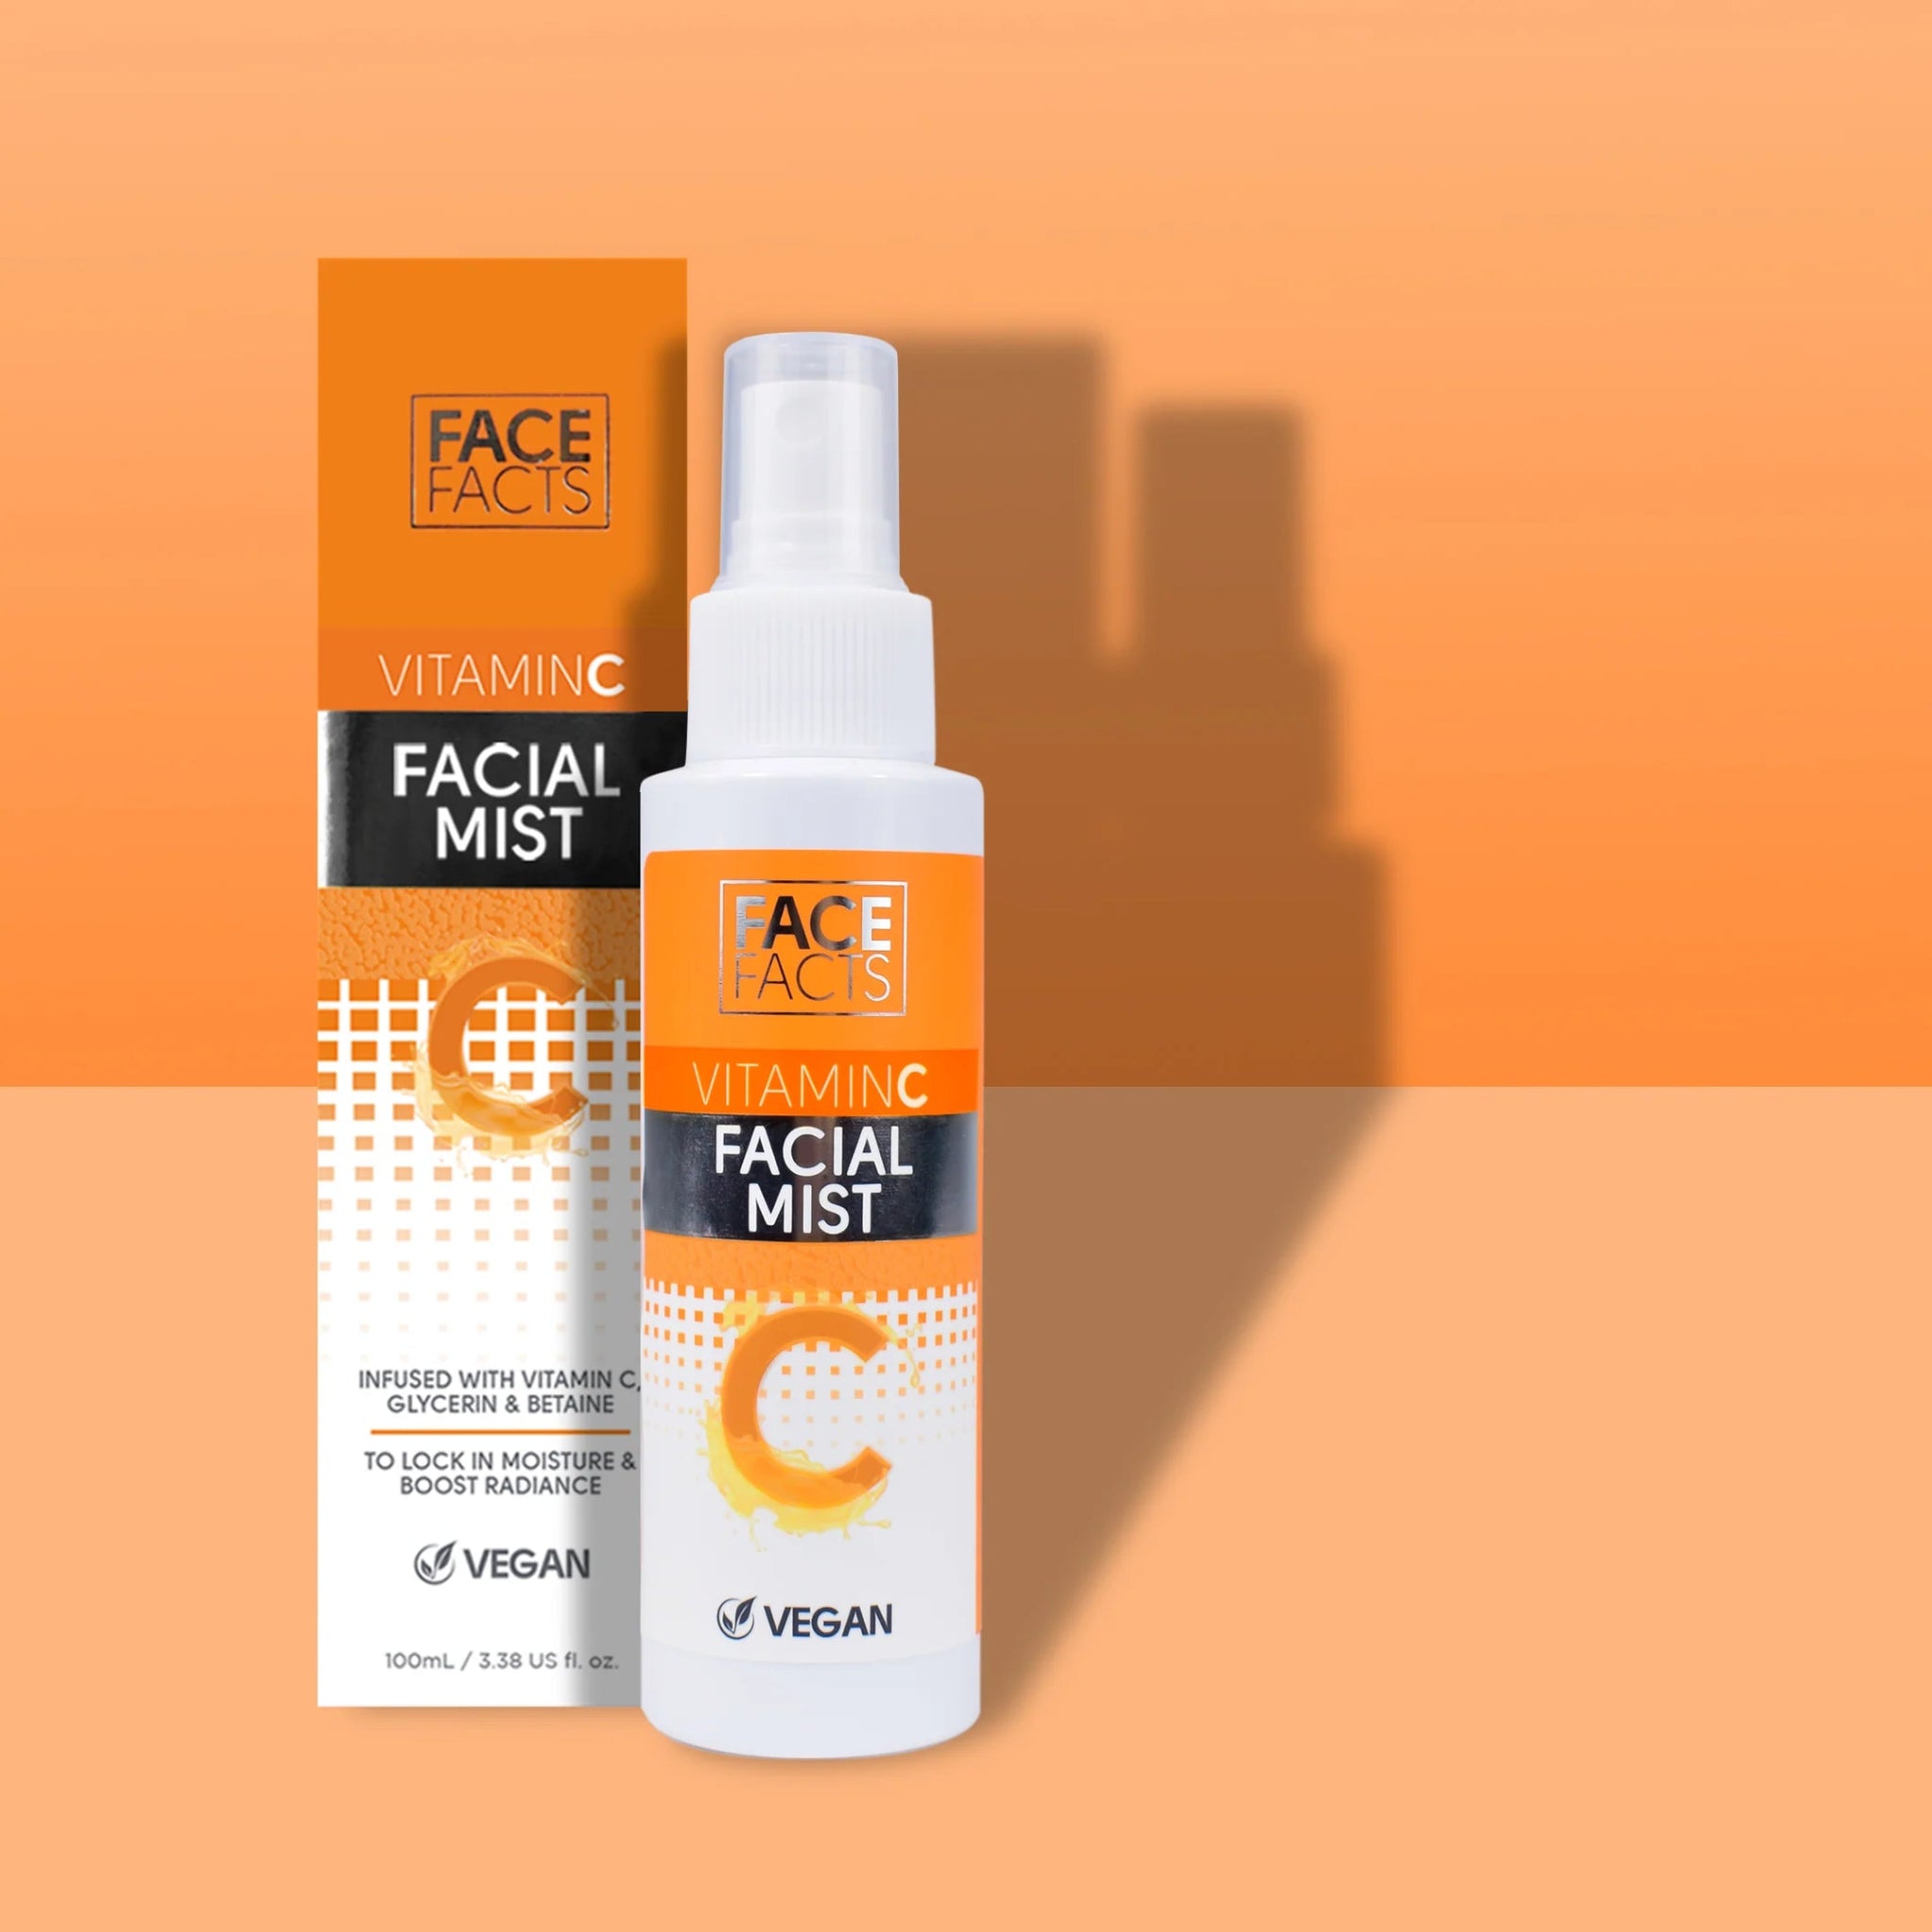 Face Facts Vitamin C Facial Mist 100ml